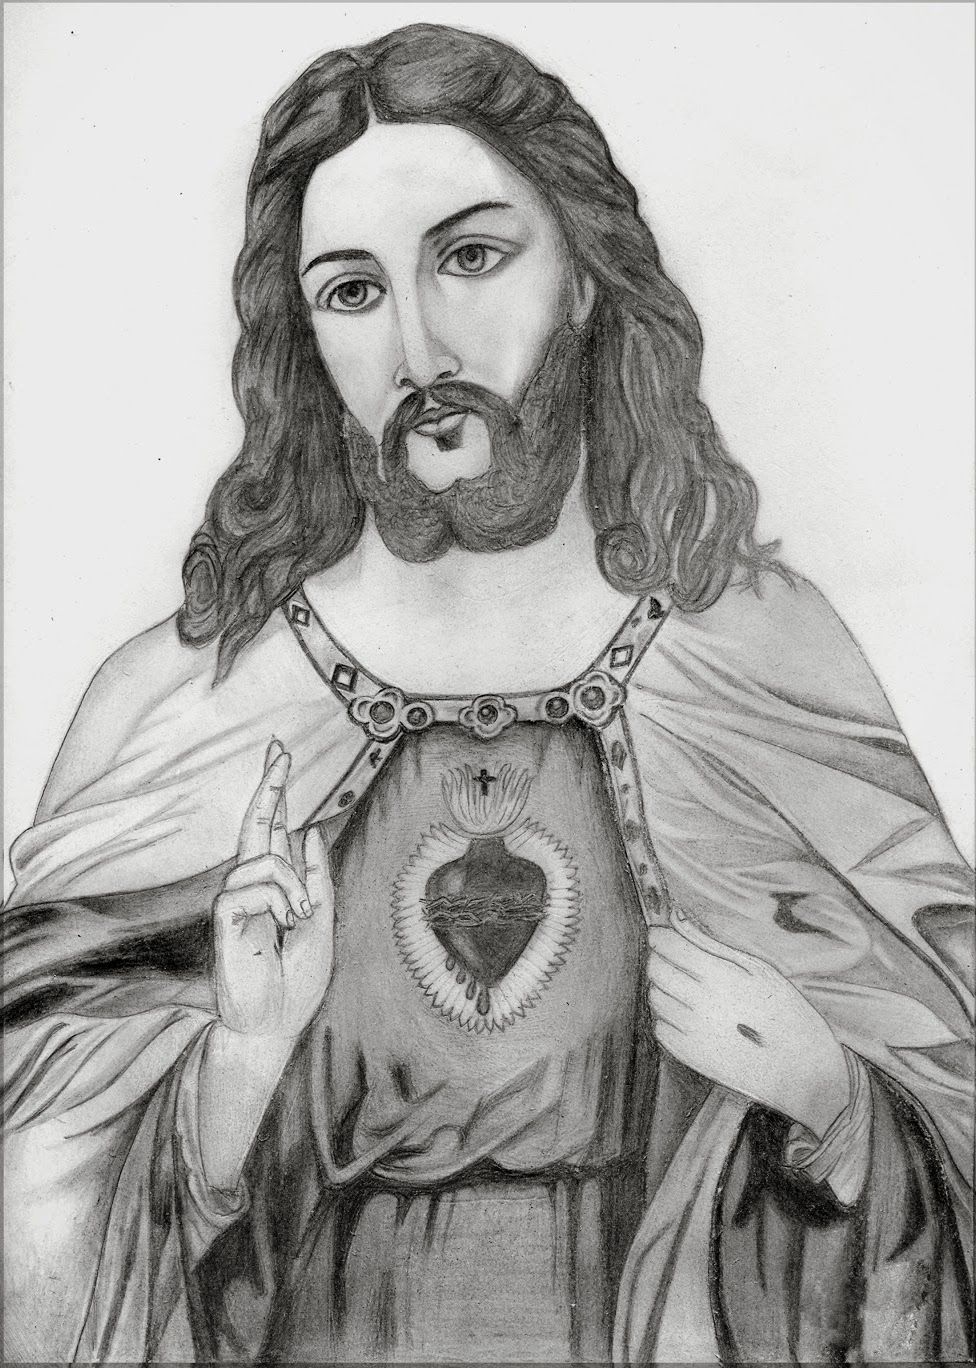 Jesus Christ by kcireseyer on DeviantArt